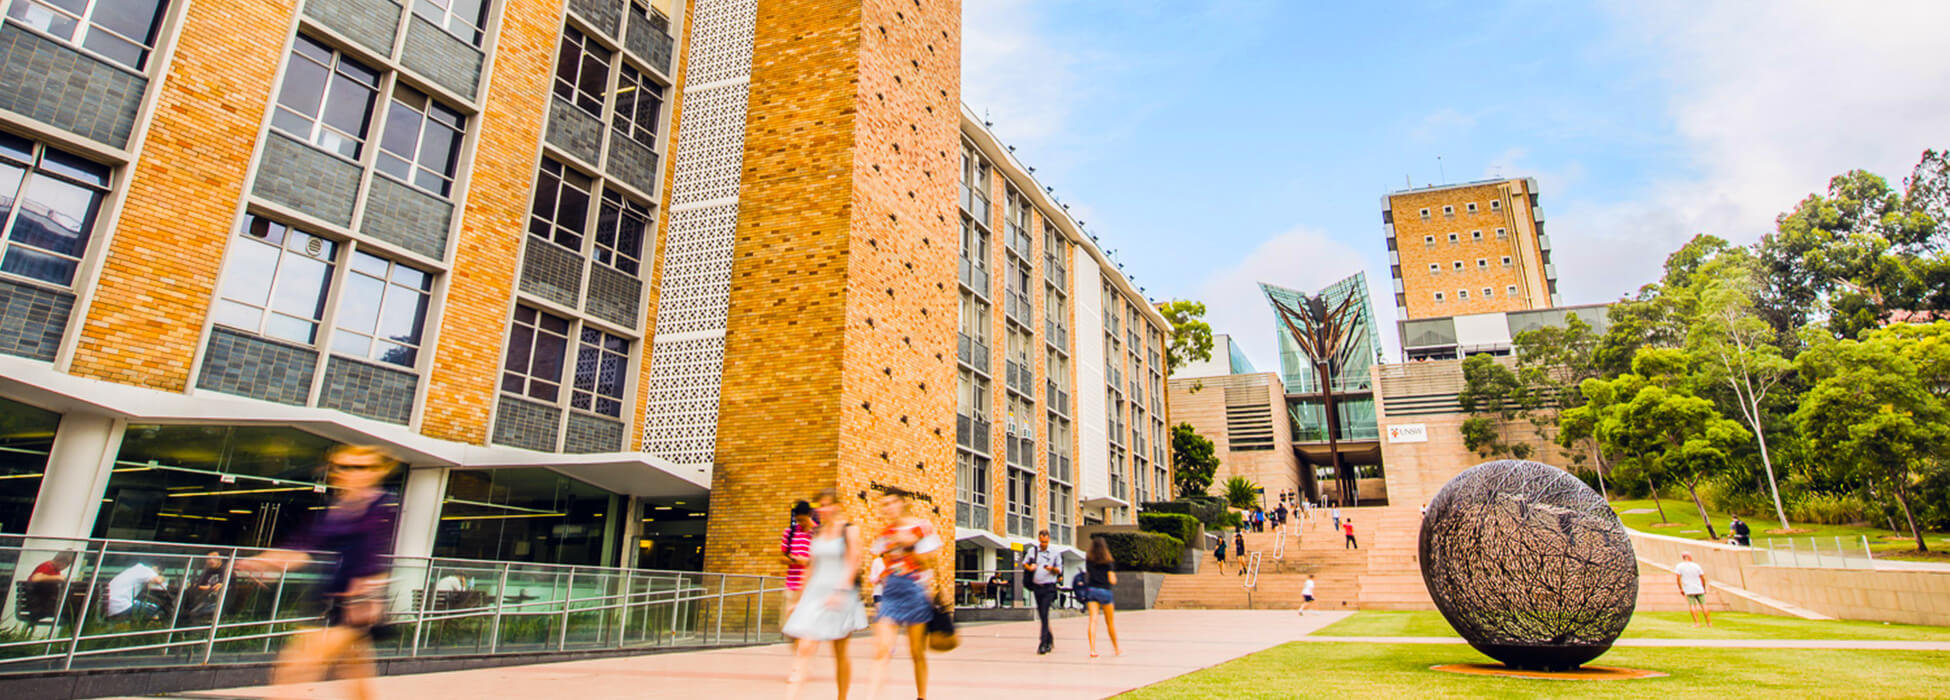 University New South Wales